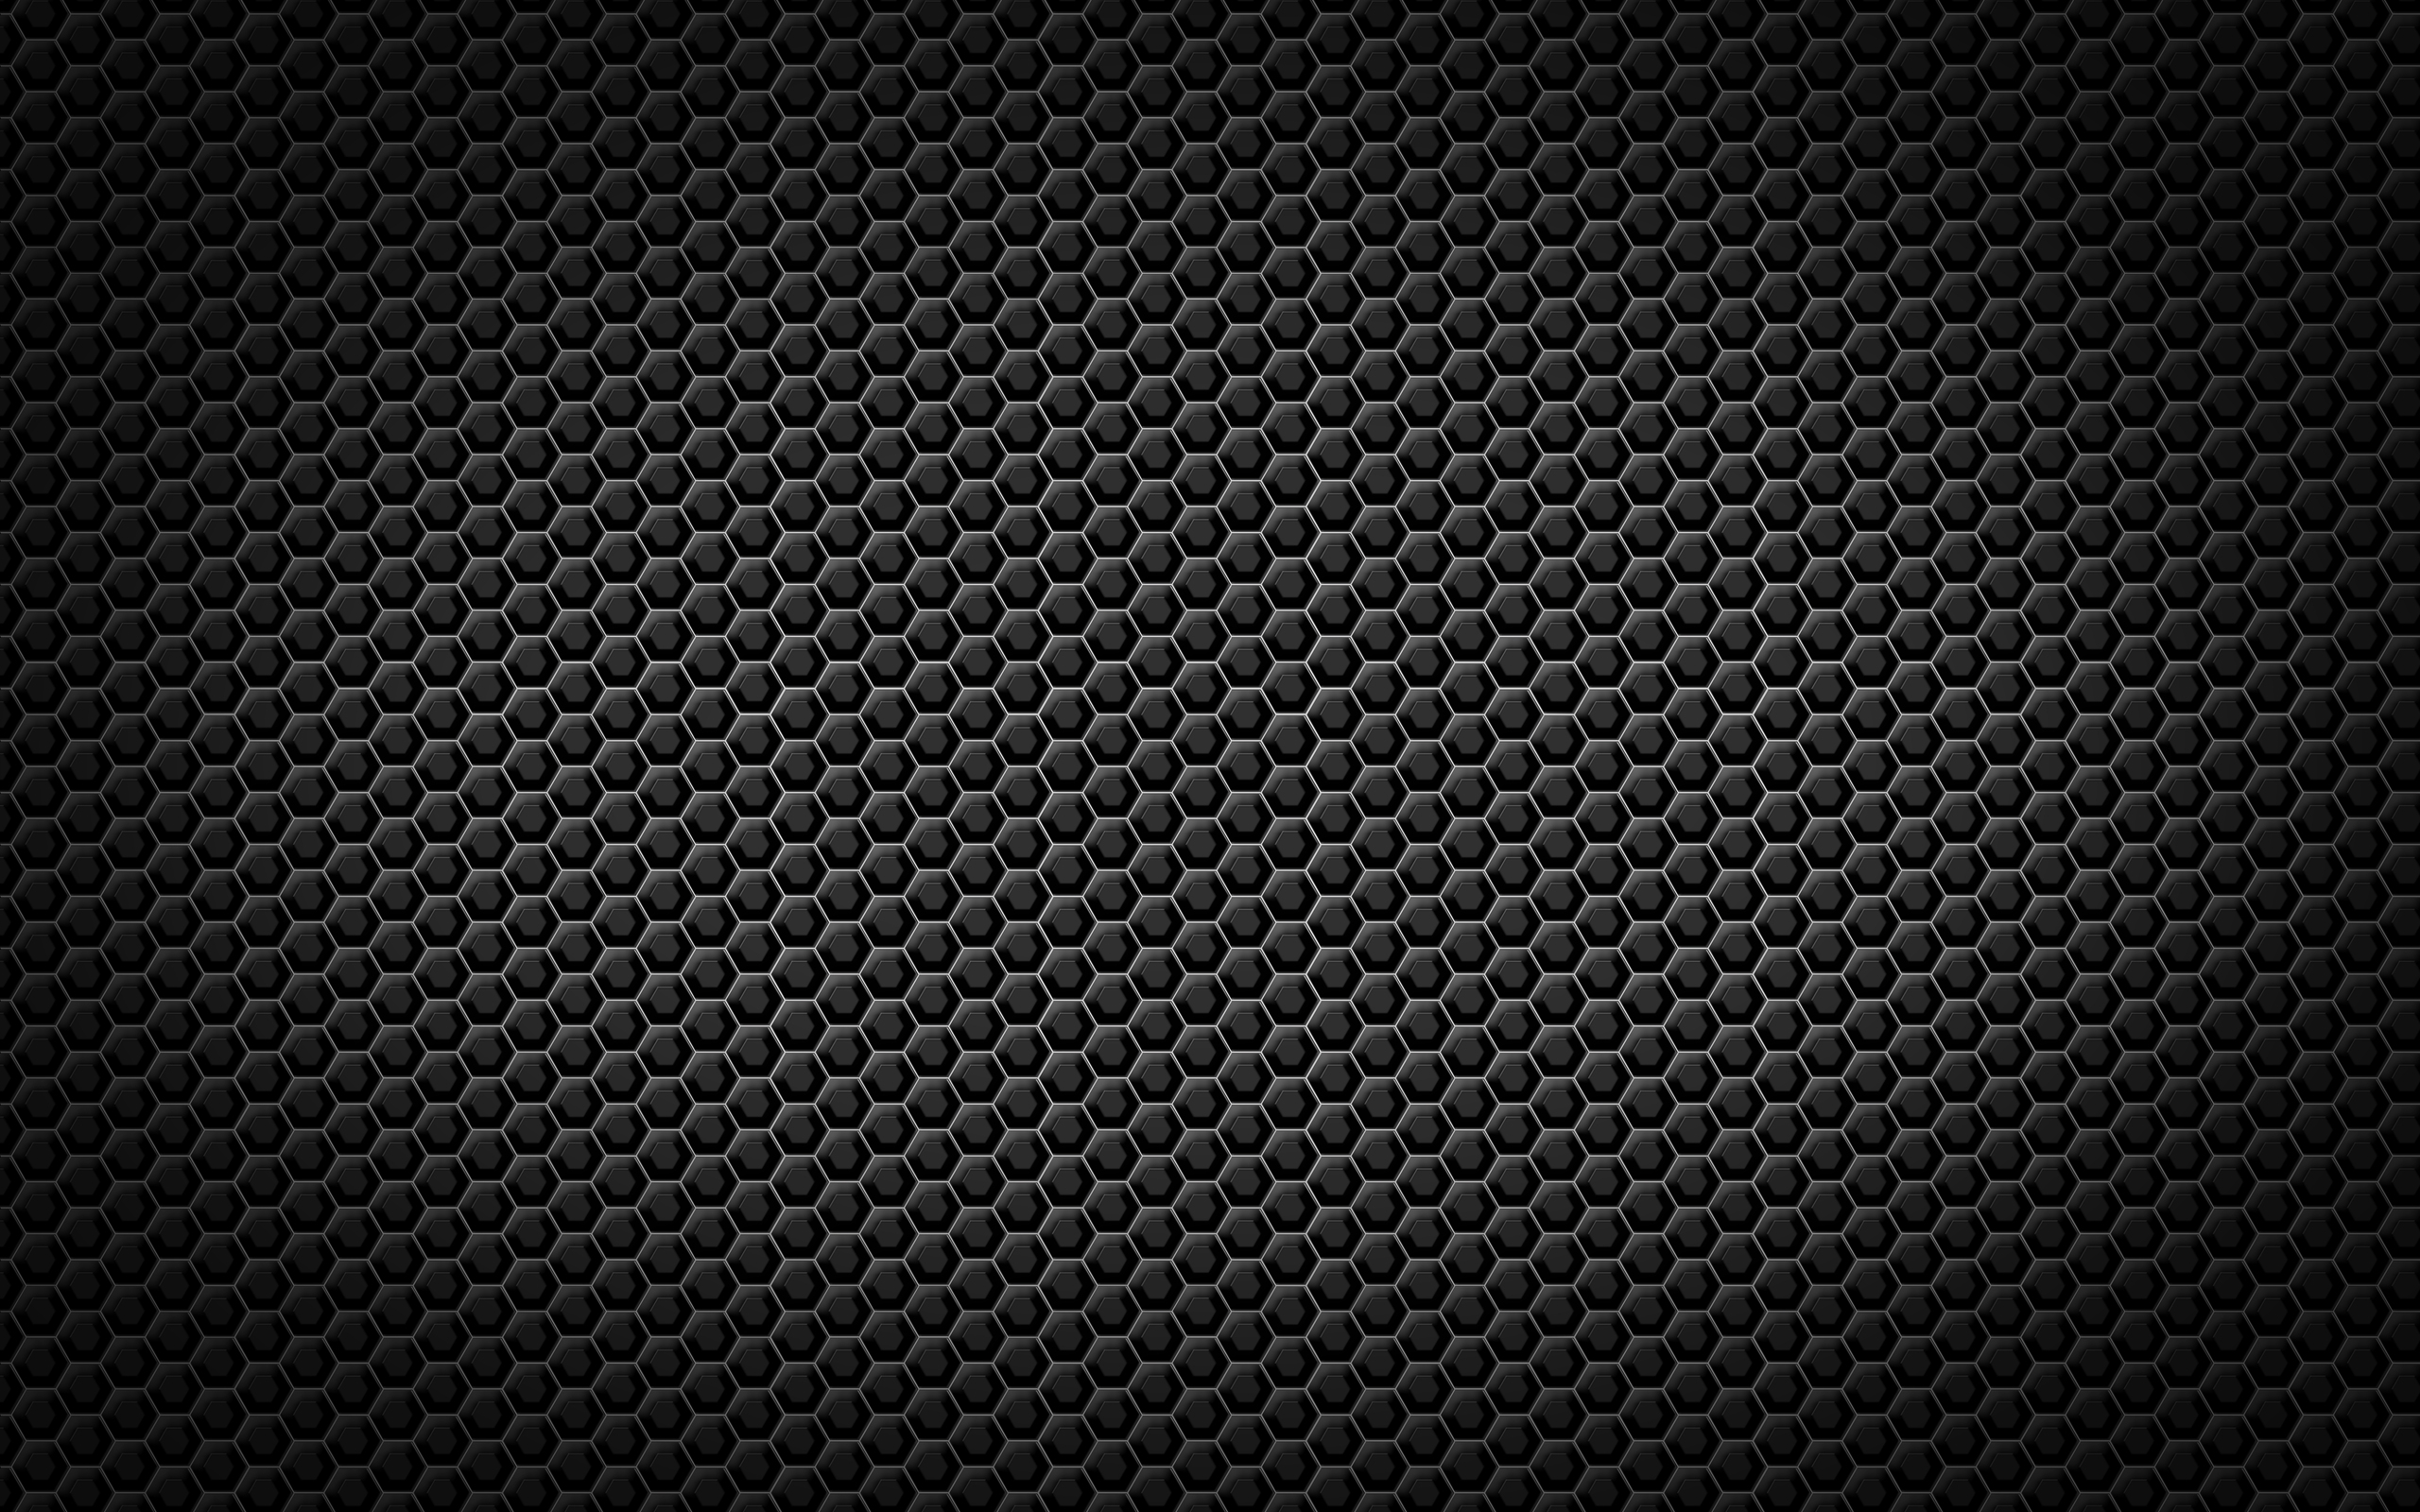 Digital blasphemy black wallpaper rose backgrounds pattern   1073022 2560x1600